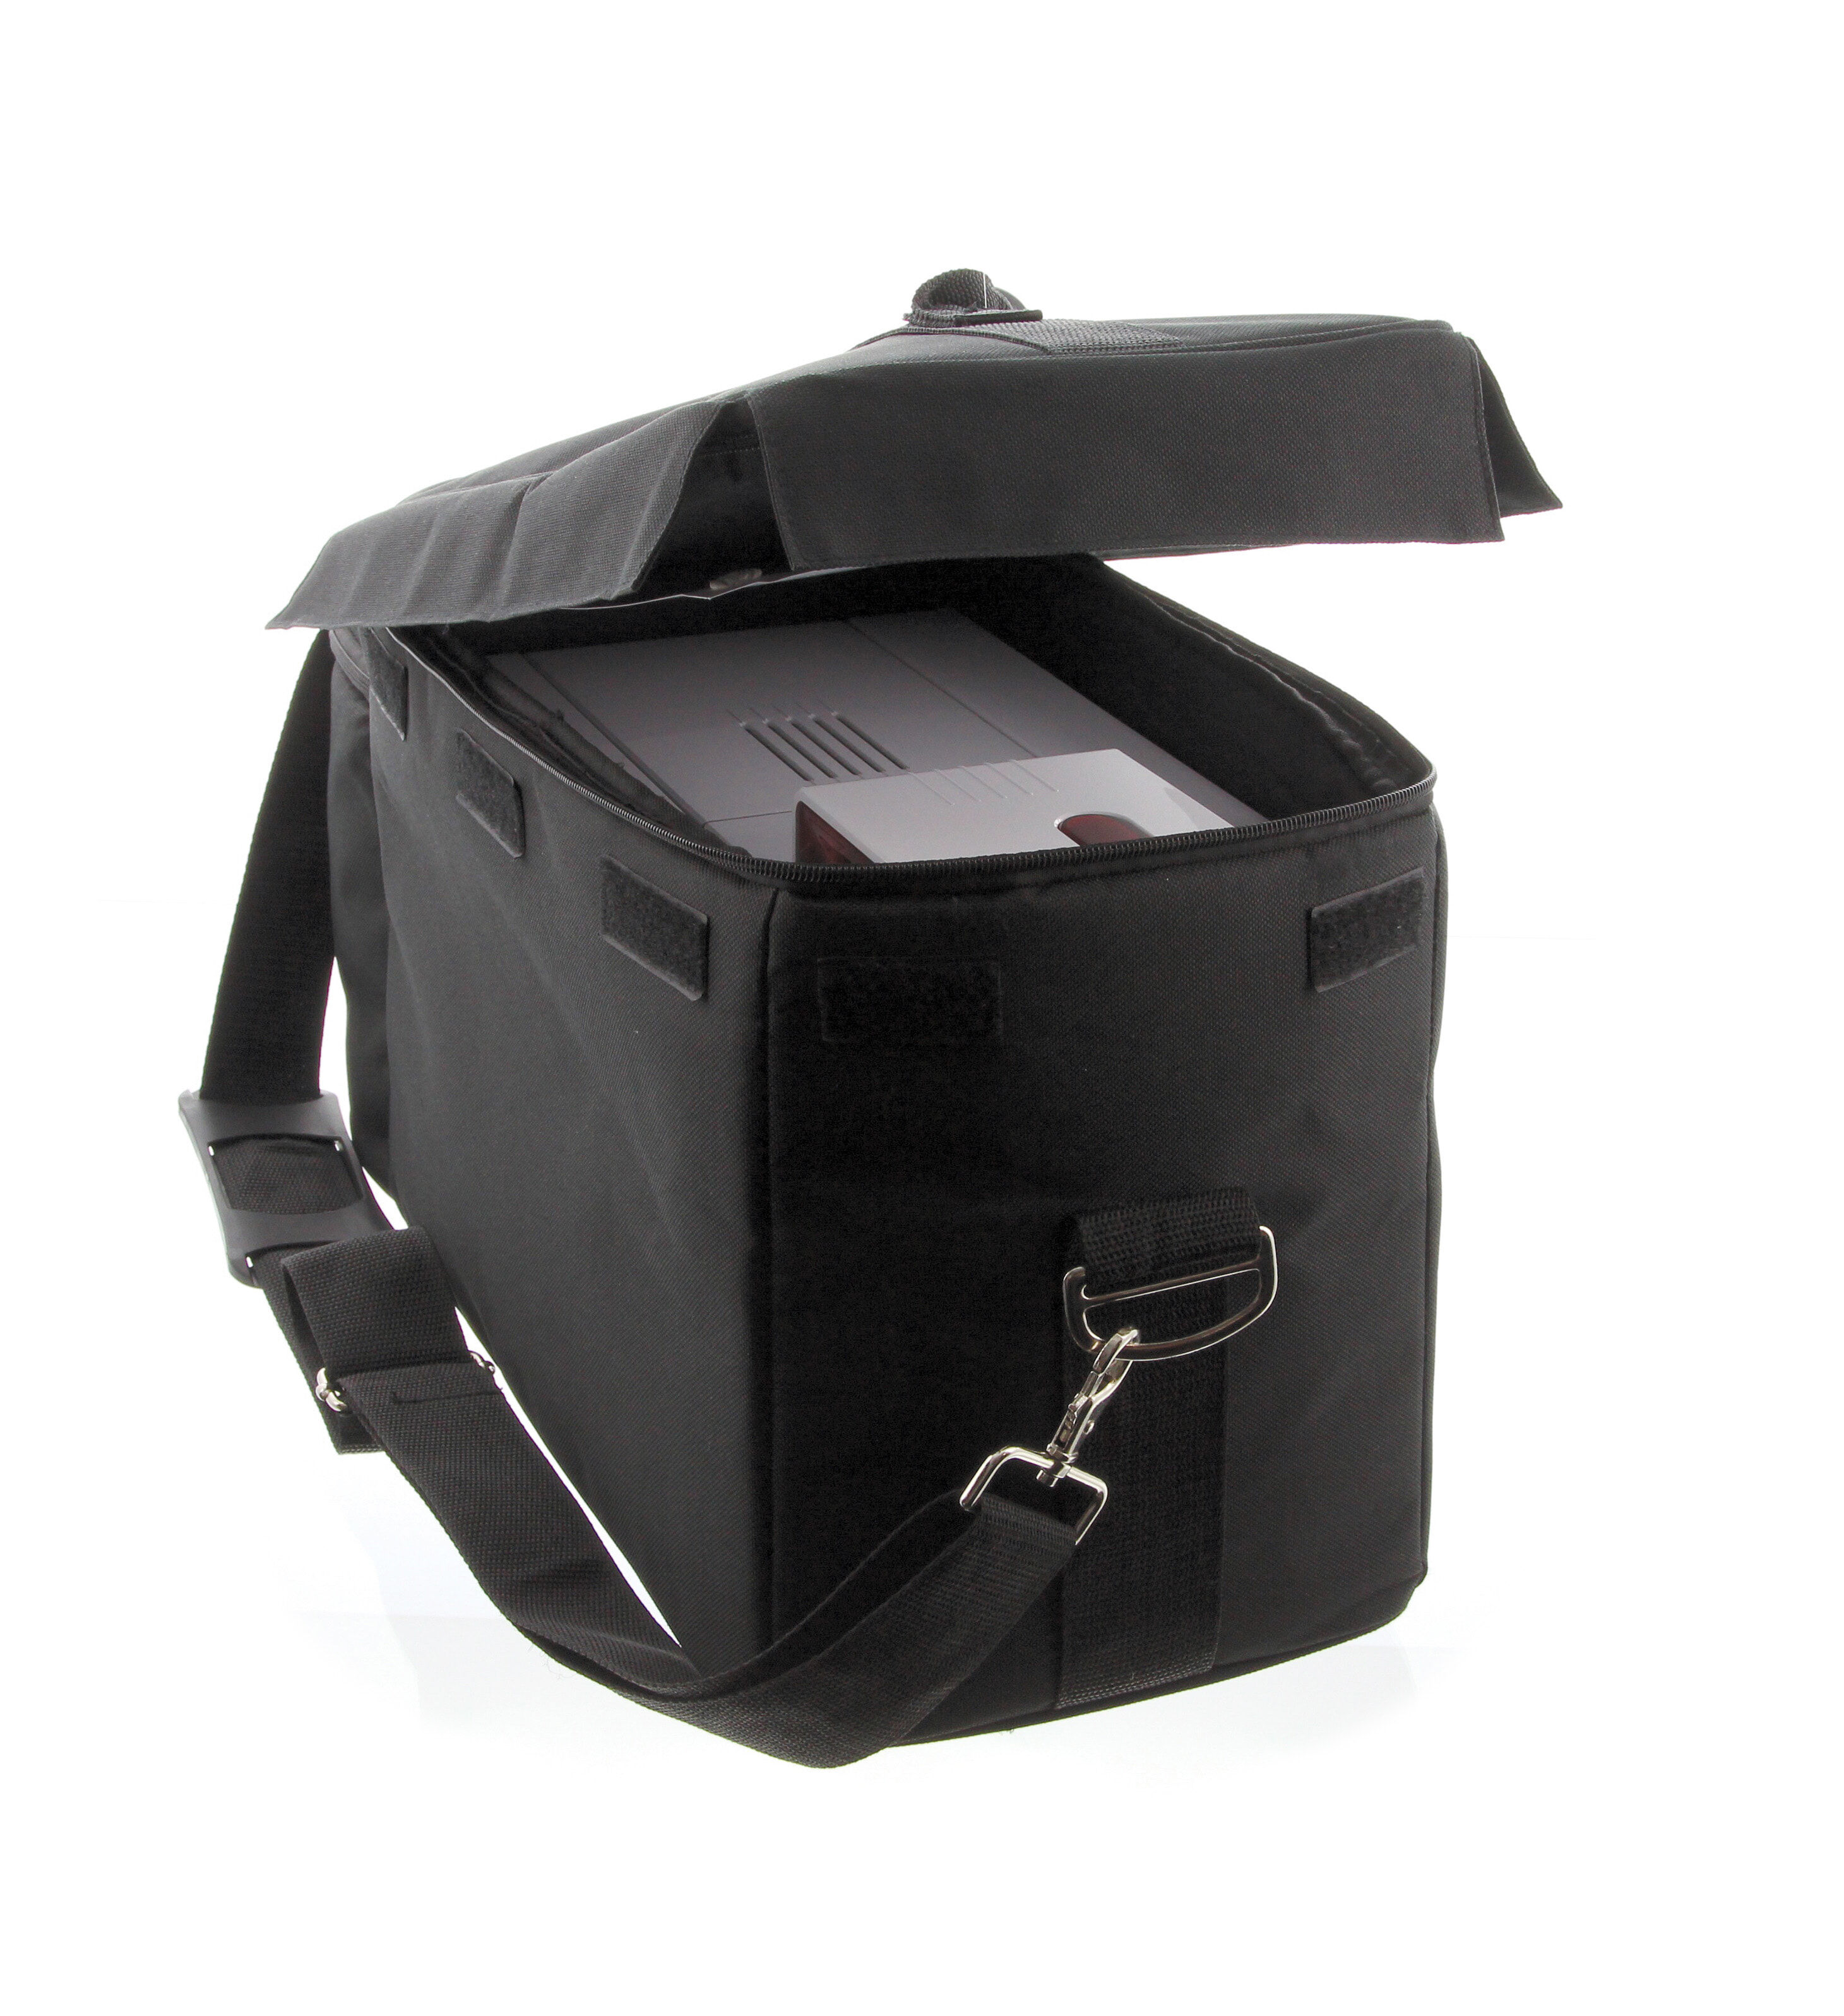 Professional travel bag for evolis Zenius & Primacy plastic card printers